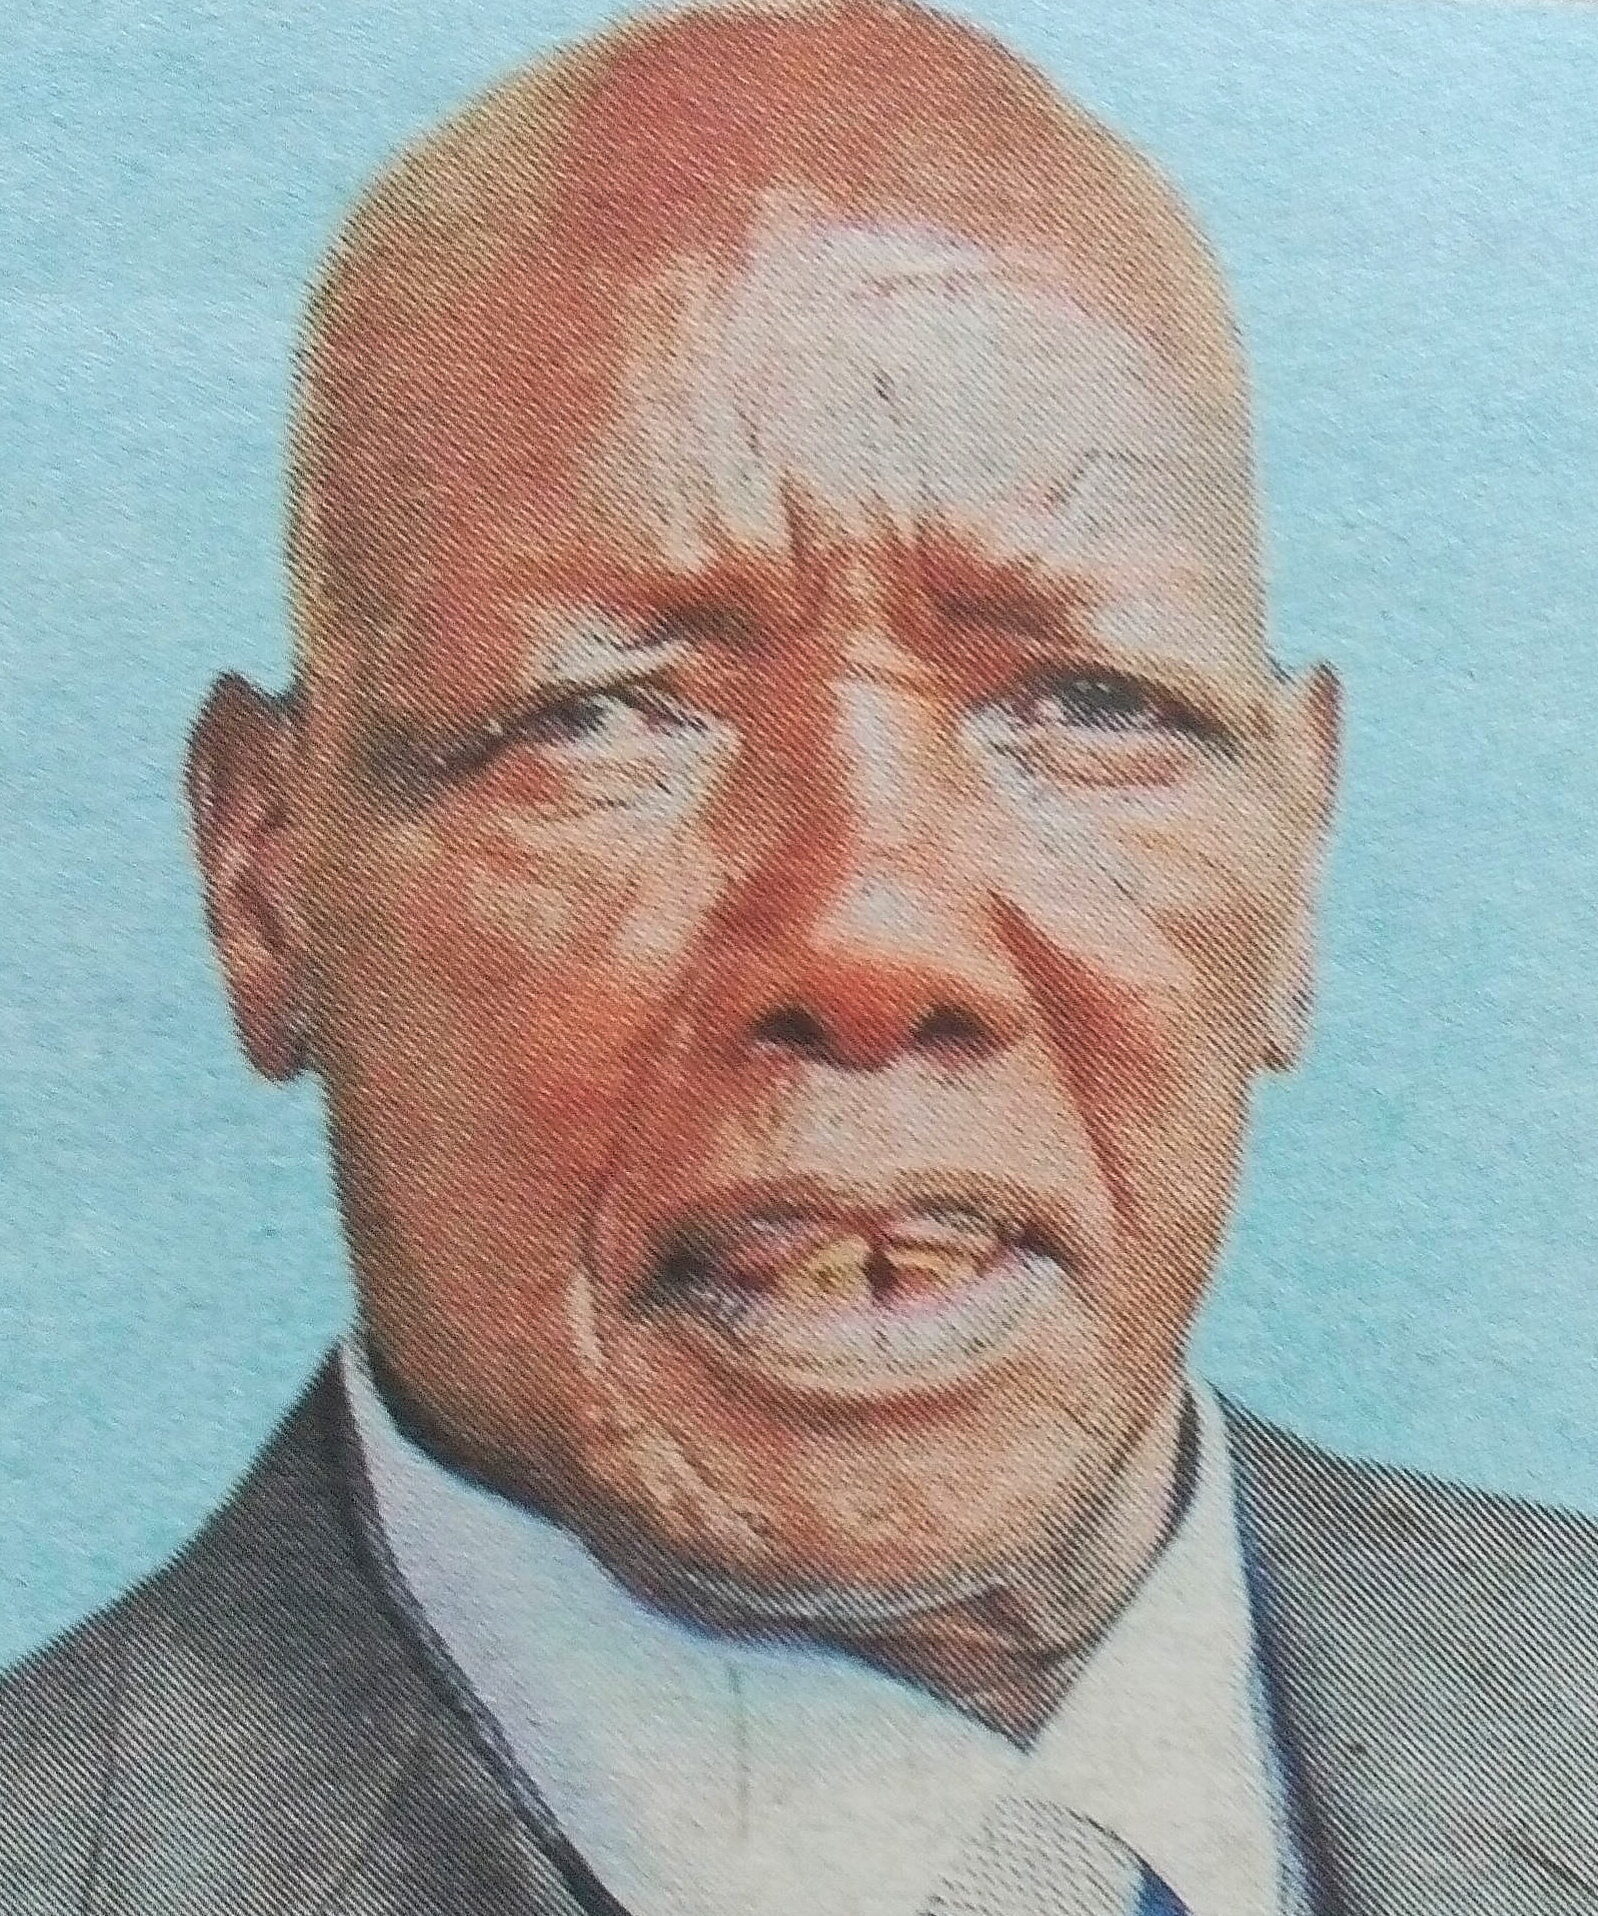 Obituary Image of Mzee Stanley Mathara Muchui